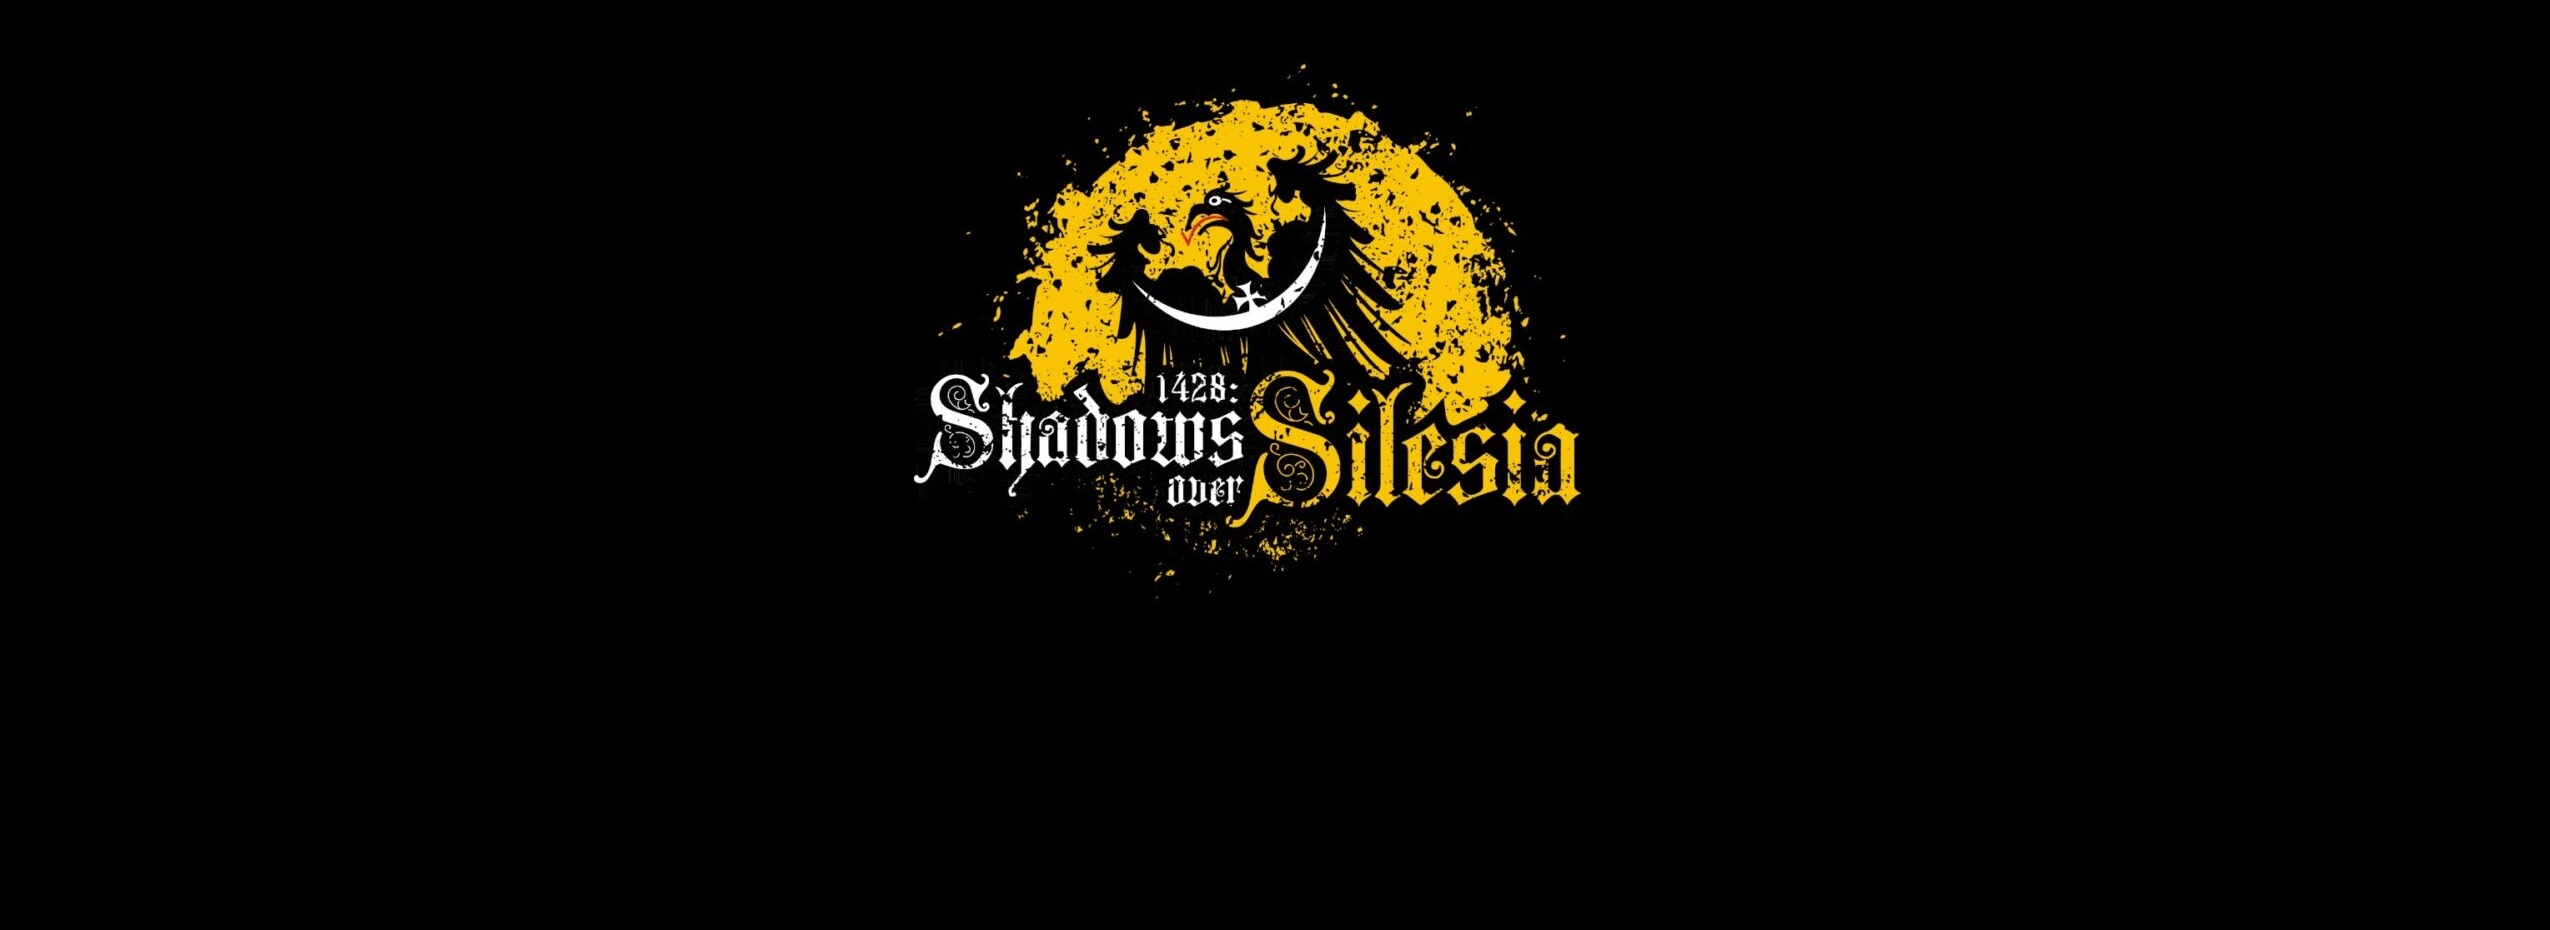 1428-Shadows-over-Silesia-1-scaled